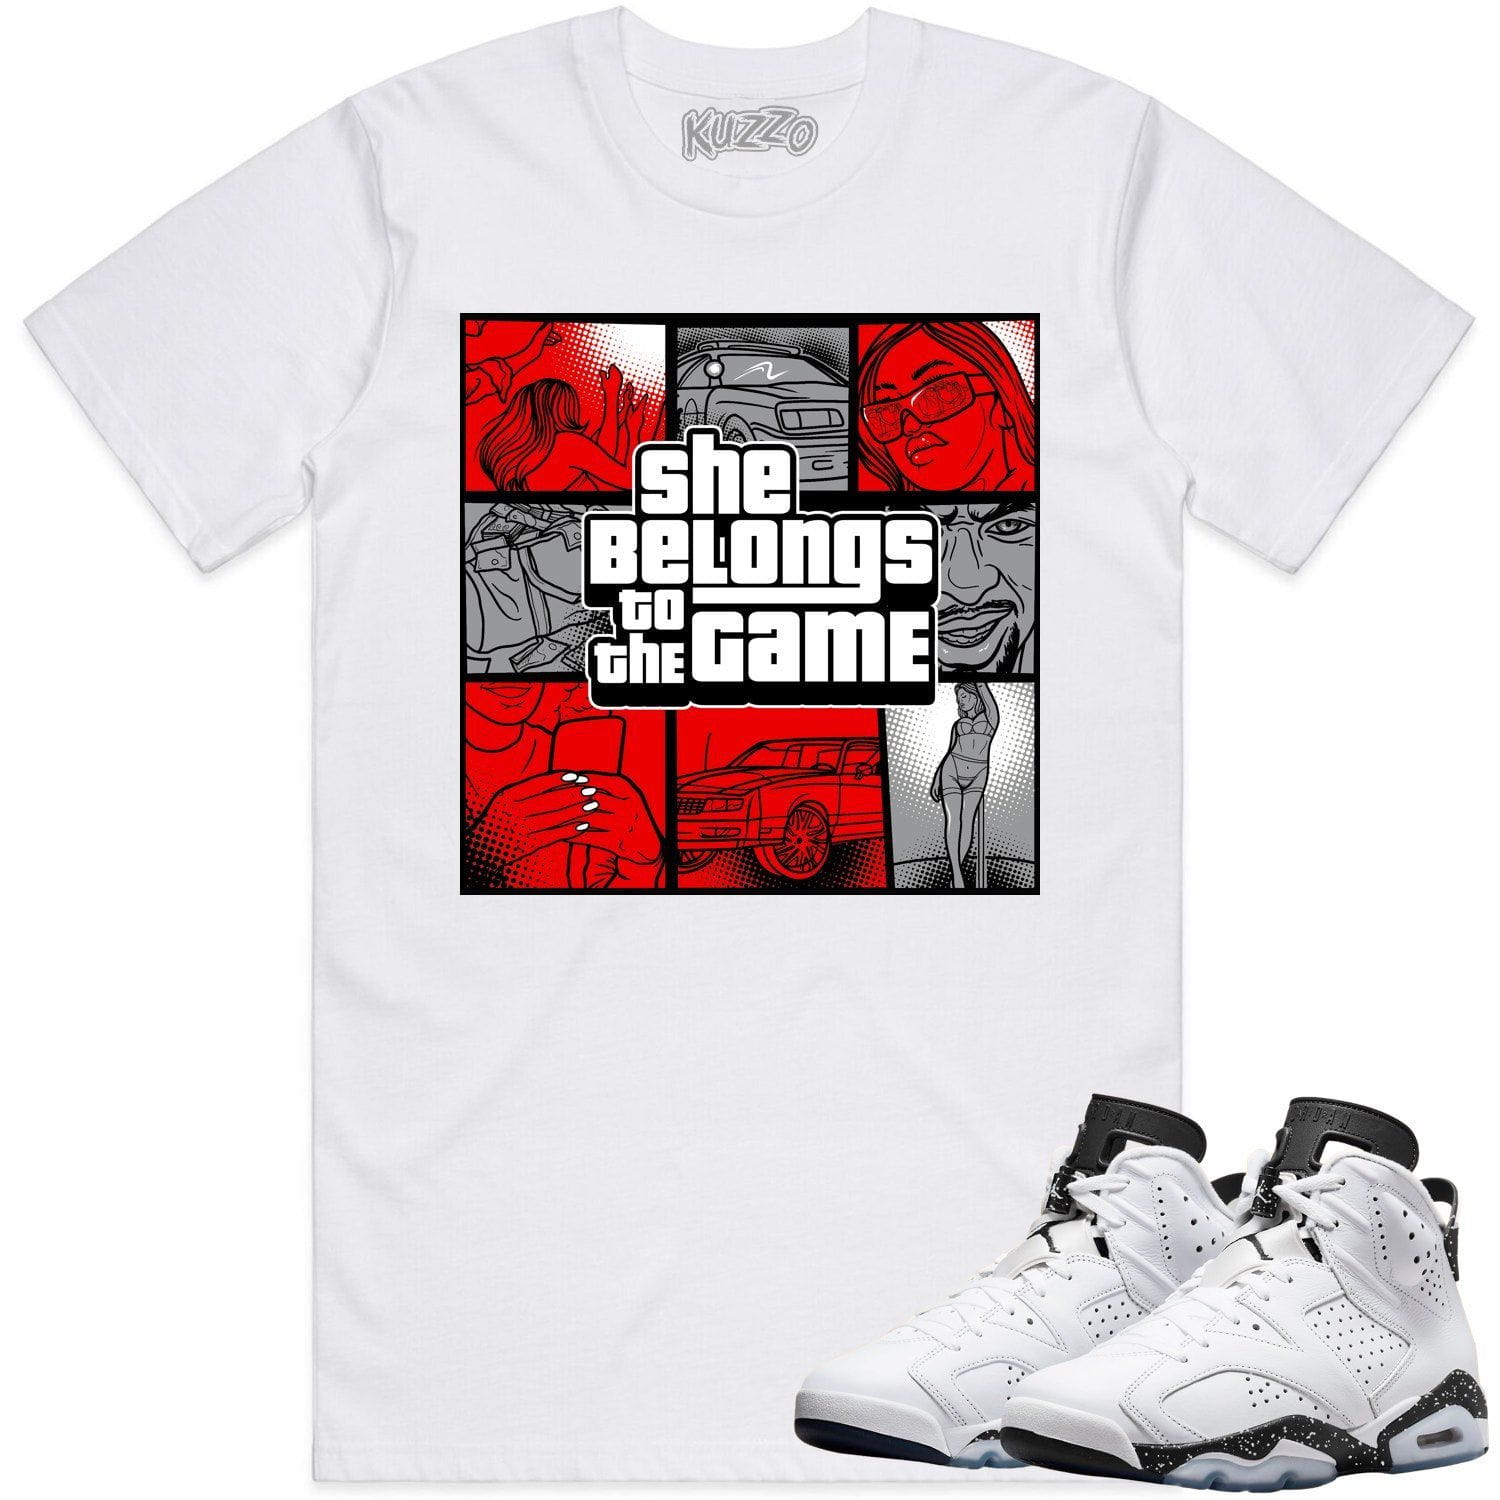 Oreo 6s Shirts - Jordan 6 Reverse Oreo 6s Sneaker Tees - Game